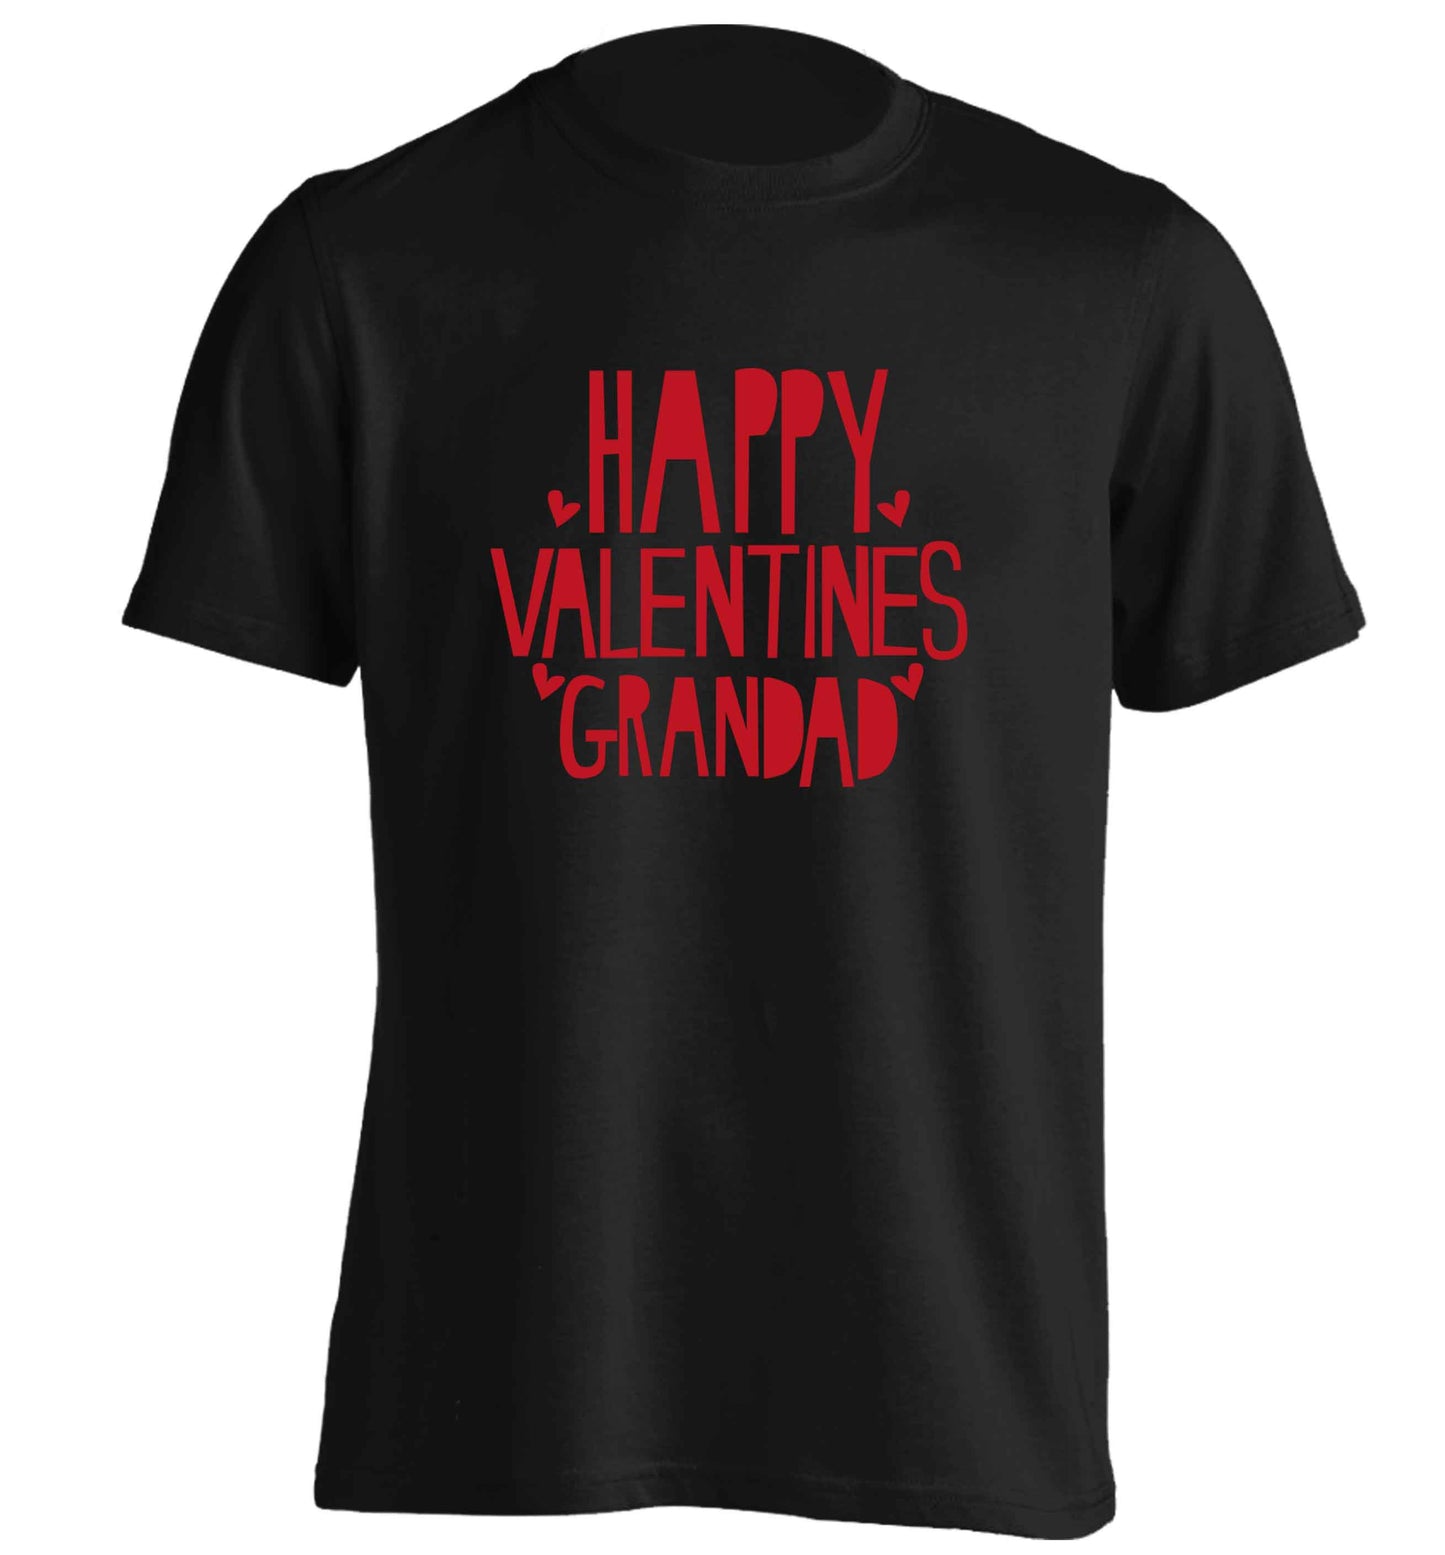 Happy valentines grandad adults unisex black Tshirt 2XL